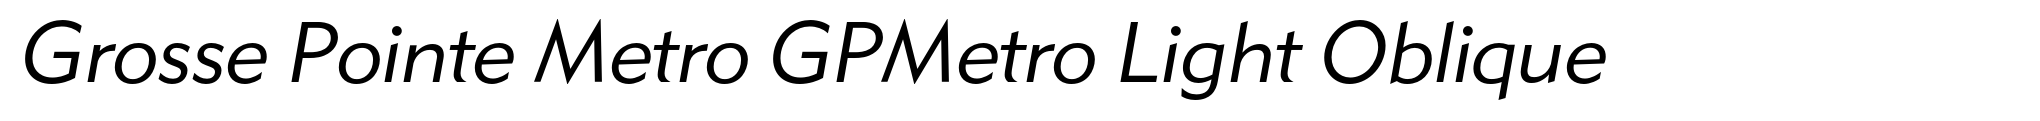 Grosse Pointe Metro GPMetro Light Oblique image